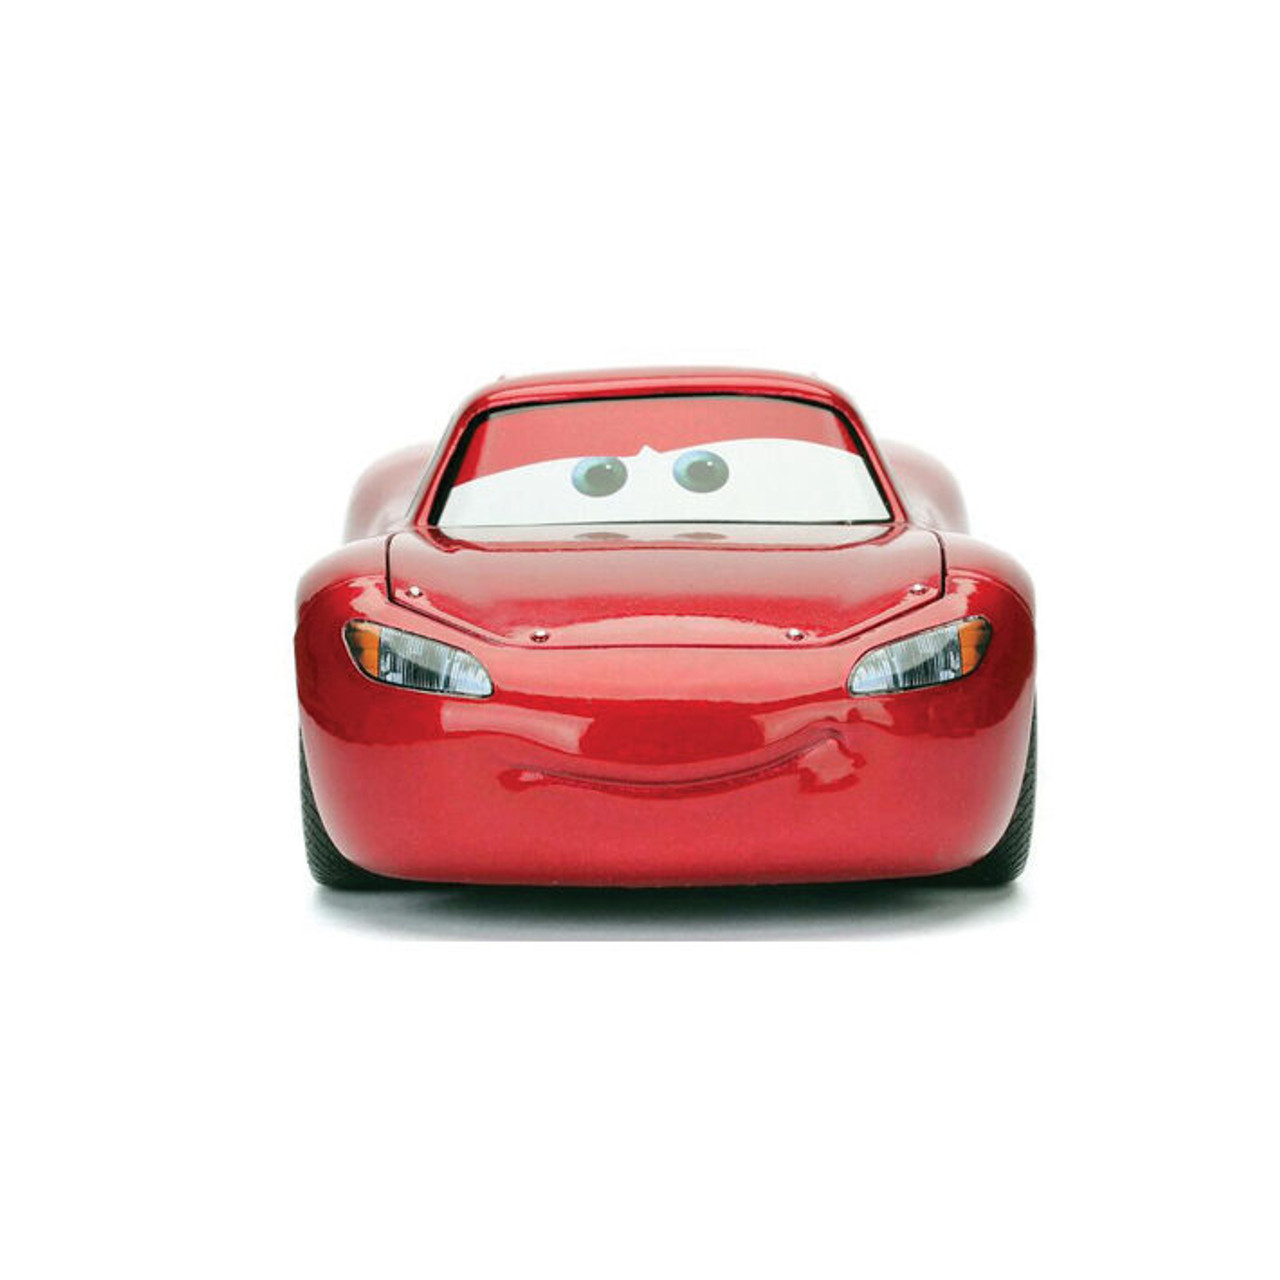 Disney Pixar Cars Cruisin' Lightning McQueen Diecast Vehicle